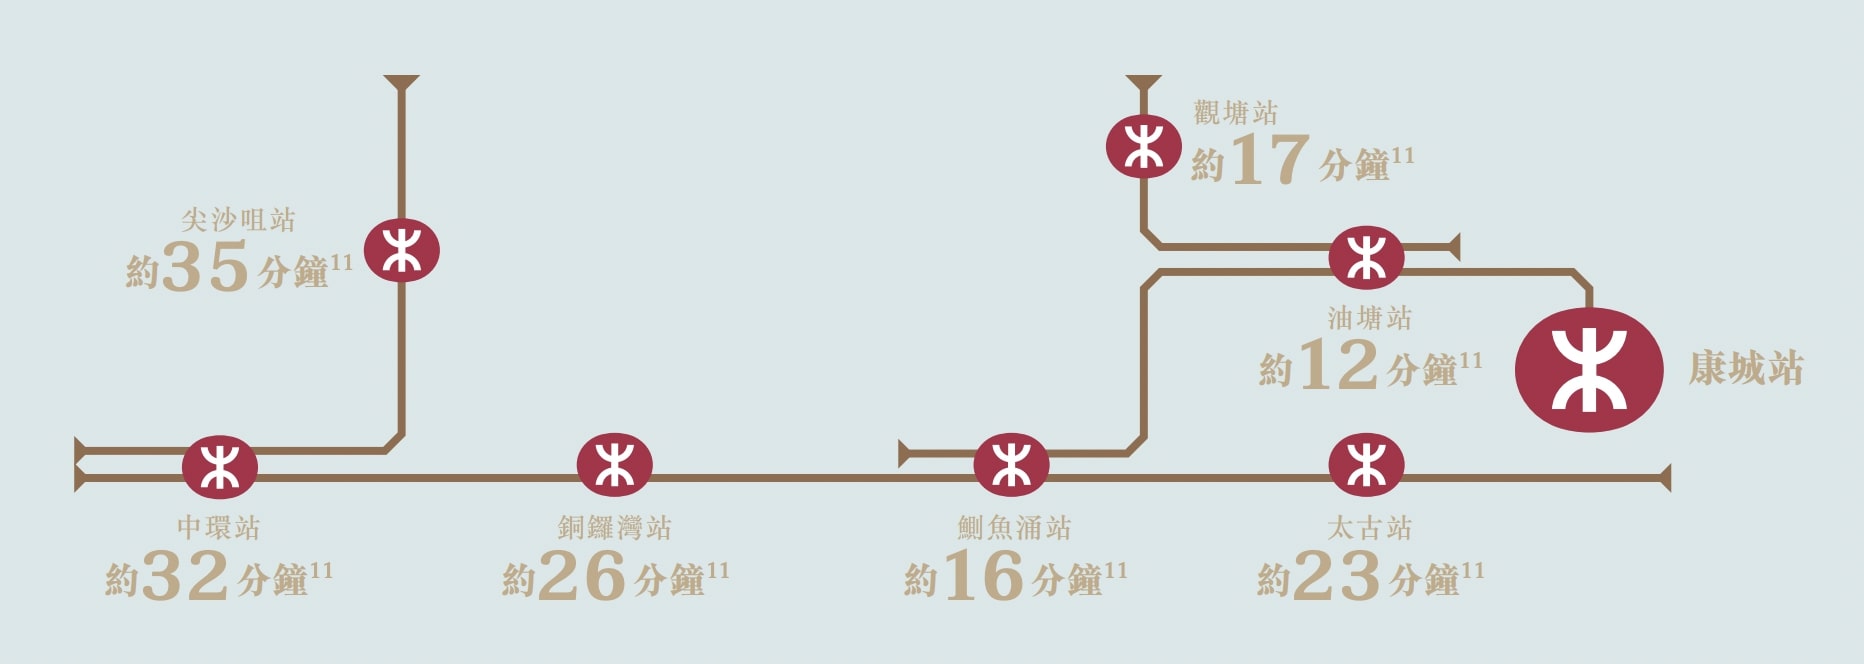 LP10 MTR鐵路圖